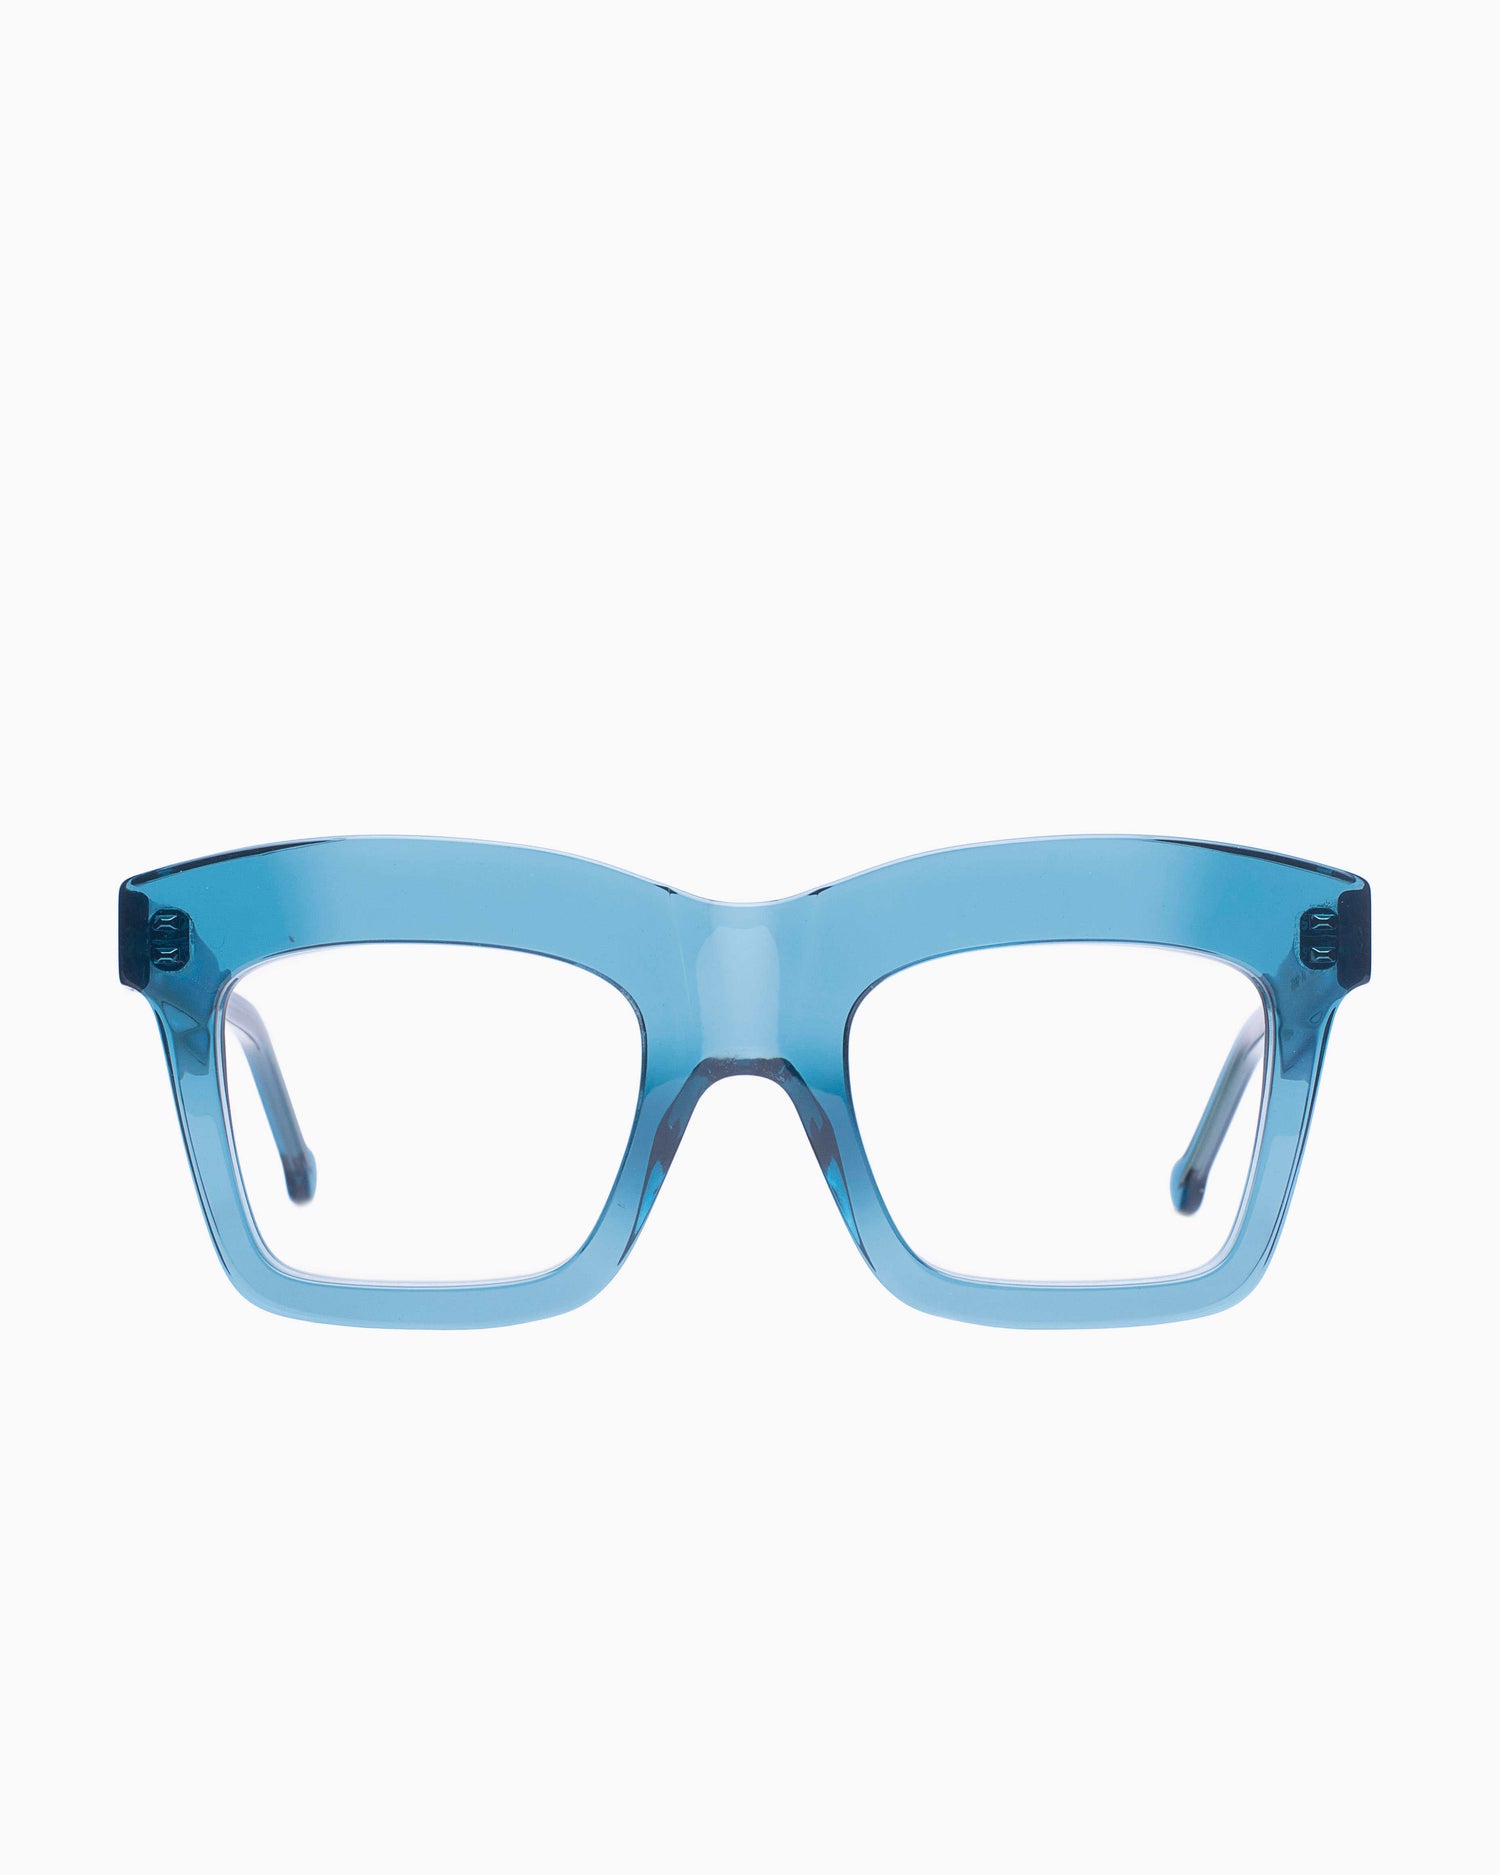 Marie-Sophie Dion - Wonka - Blu | glasses bar:  Marie-Sophie Dion